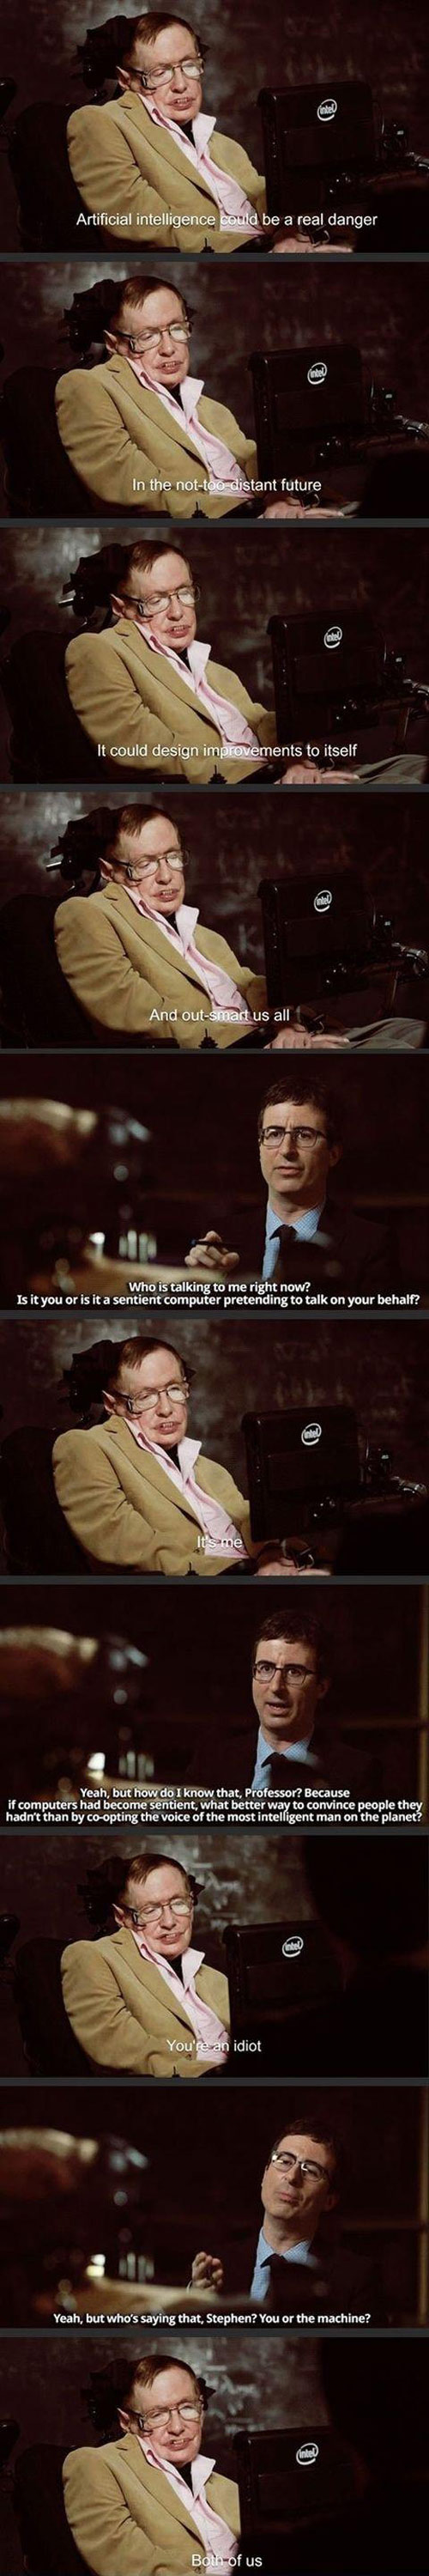 Stephen Hawking on artificial intelligence